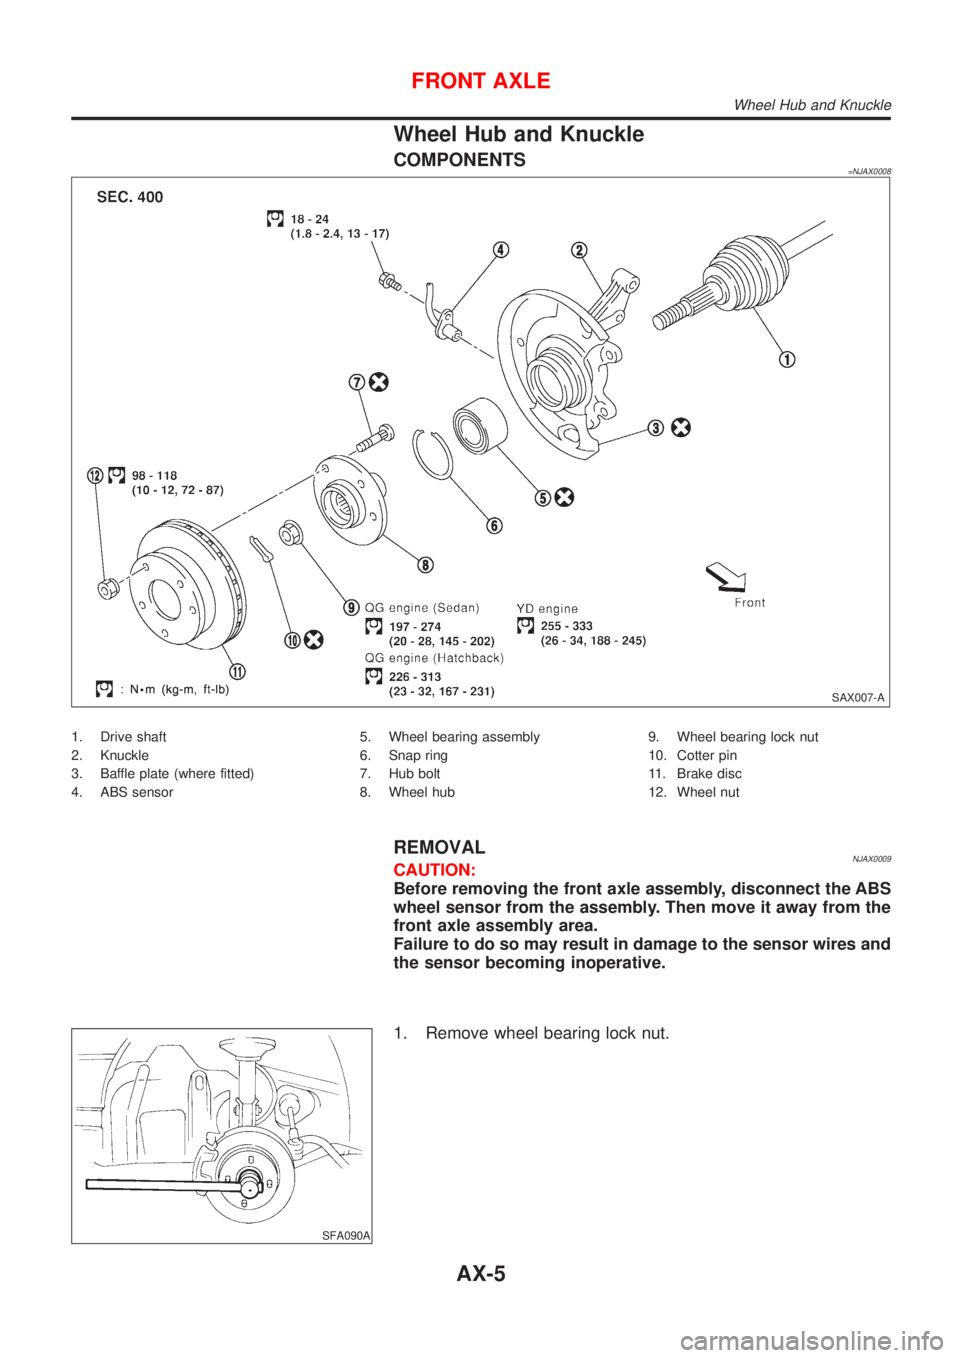 NISSAN ALMERA 2001  Service Manual Wheel Hub and Knuckle
COMPONENTS=NJAX0008
SAX007-A
1. Drive shaft
2. Knuckle
3. Baffle plate (where fitted)
4. ABS sensor5. Wheel bearing assembly
6. Snap ring
7. Hub bolt
8. Wheel hub9. Wheel bearing